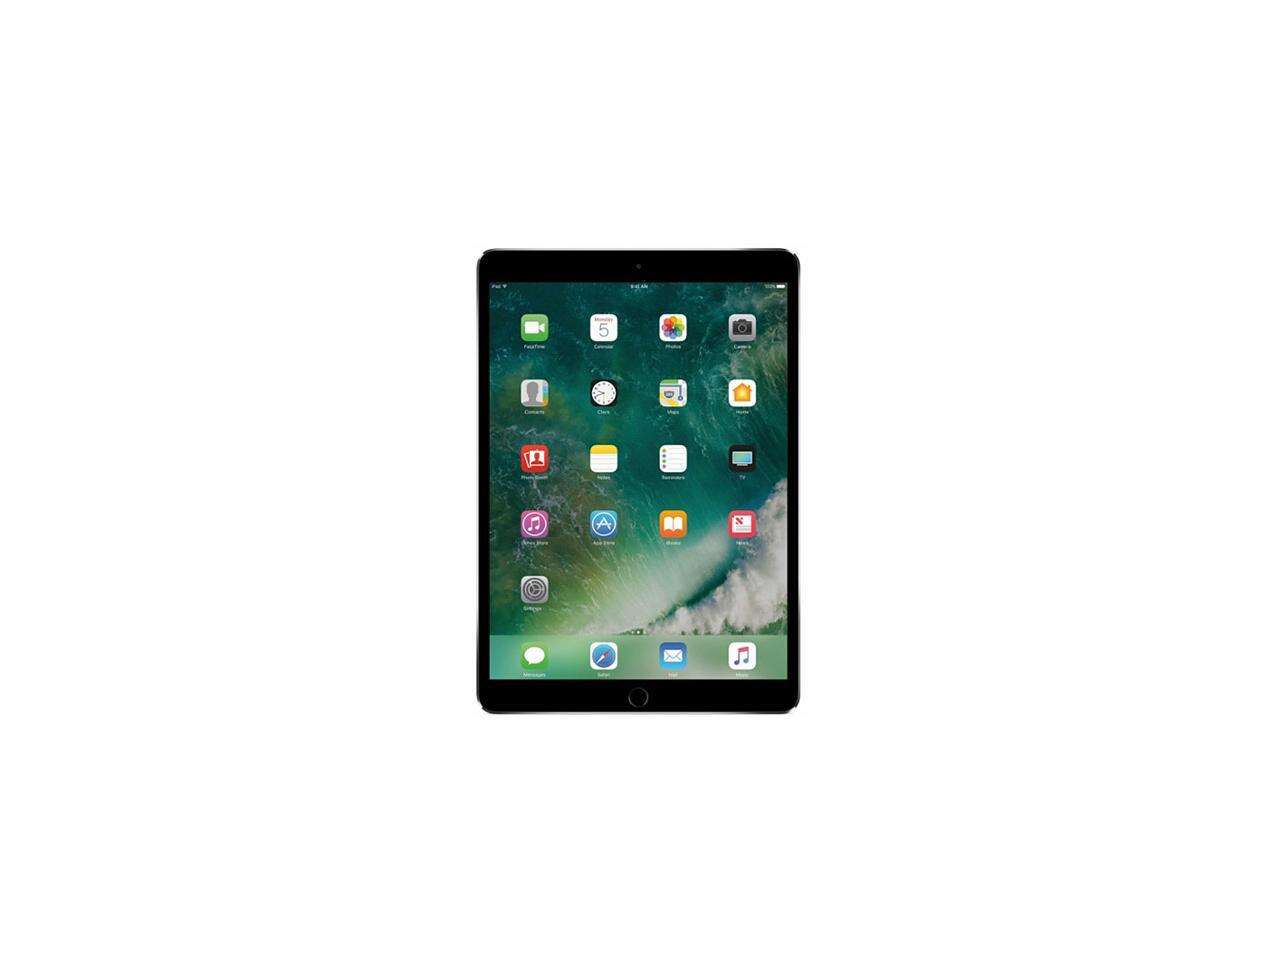 Apple iPad Pro Apple A10X Fusion 512 GB Flash Storage 10.5